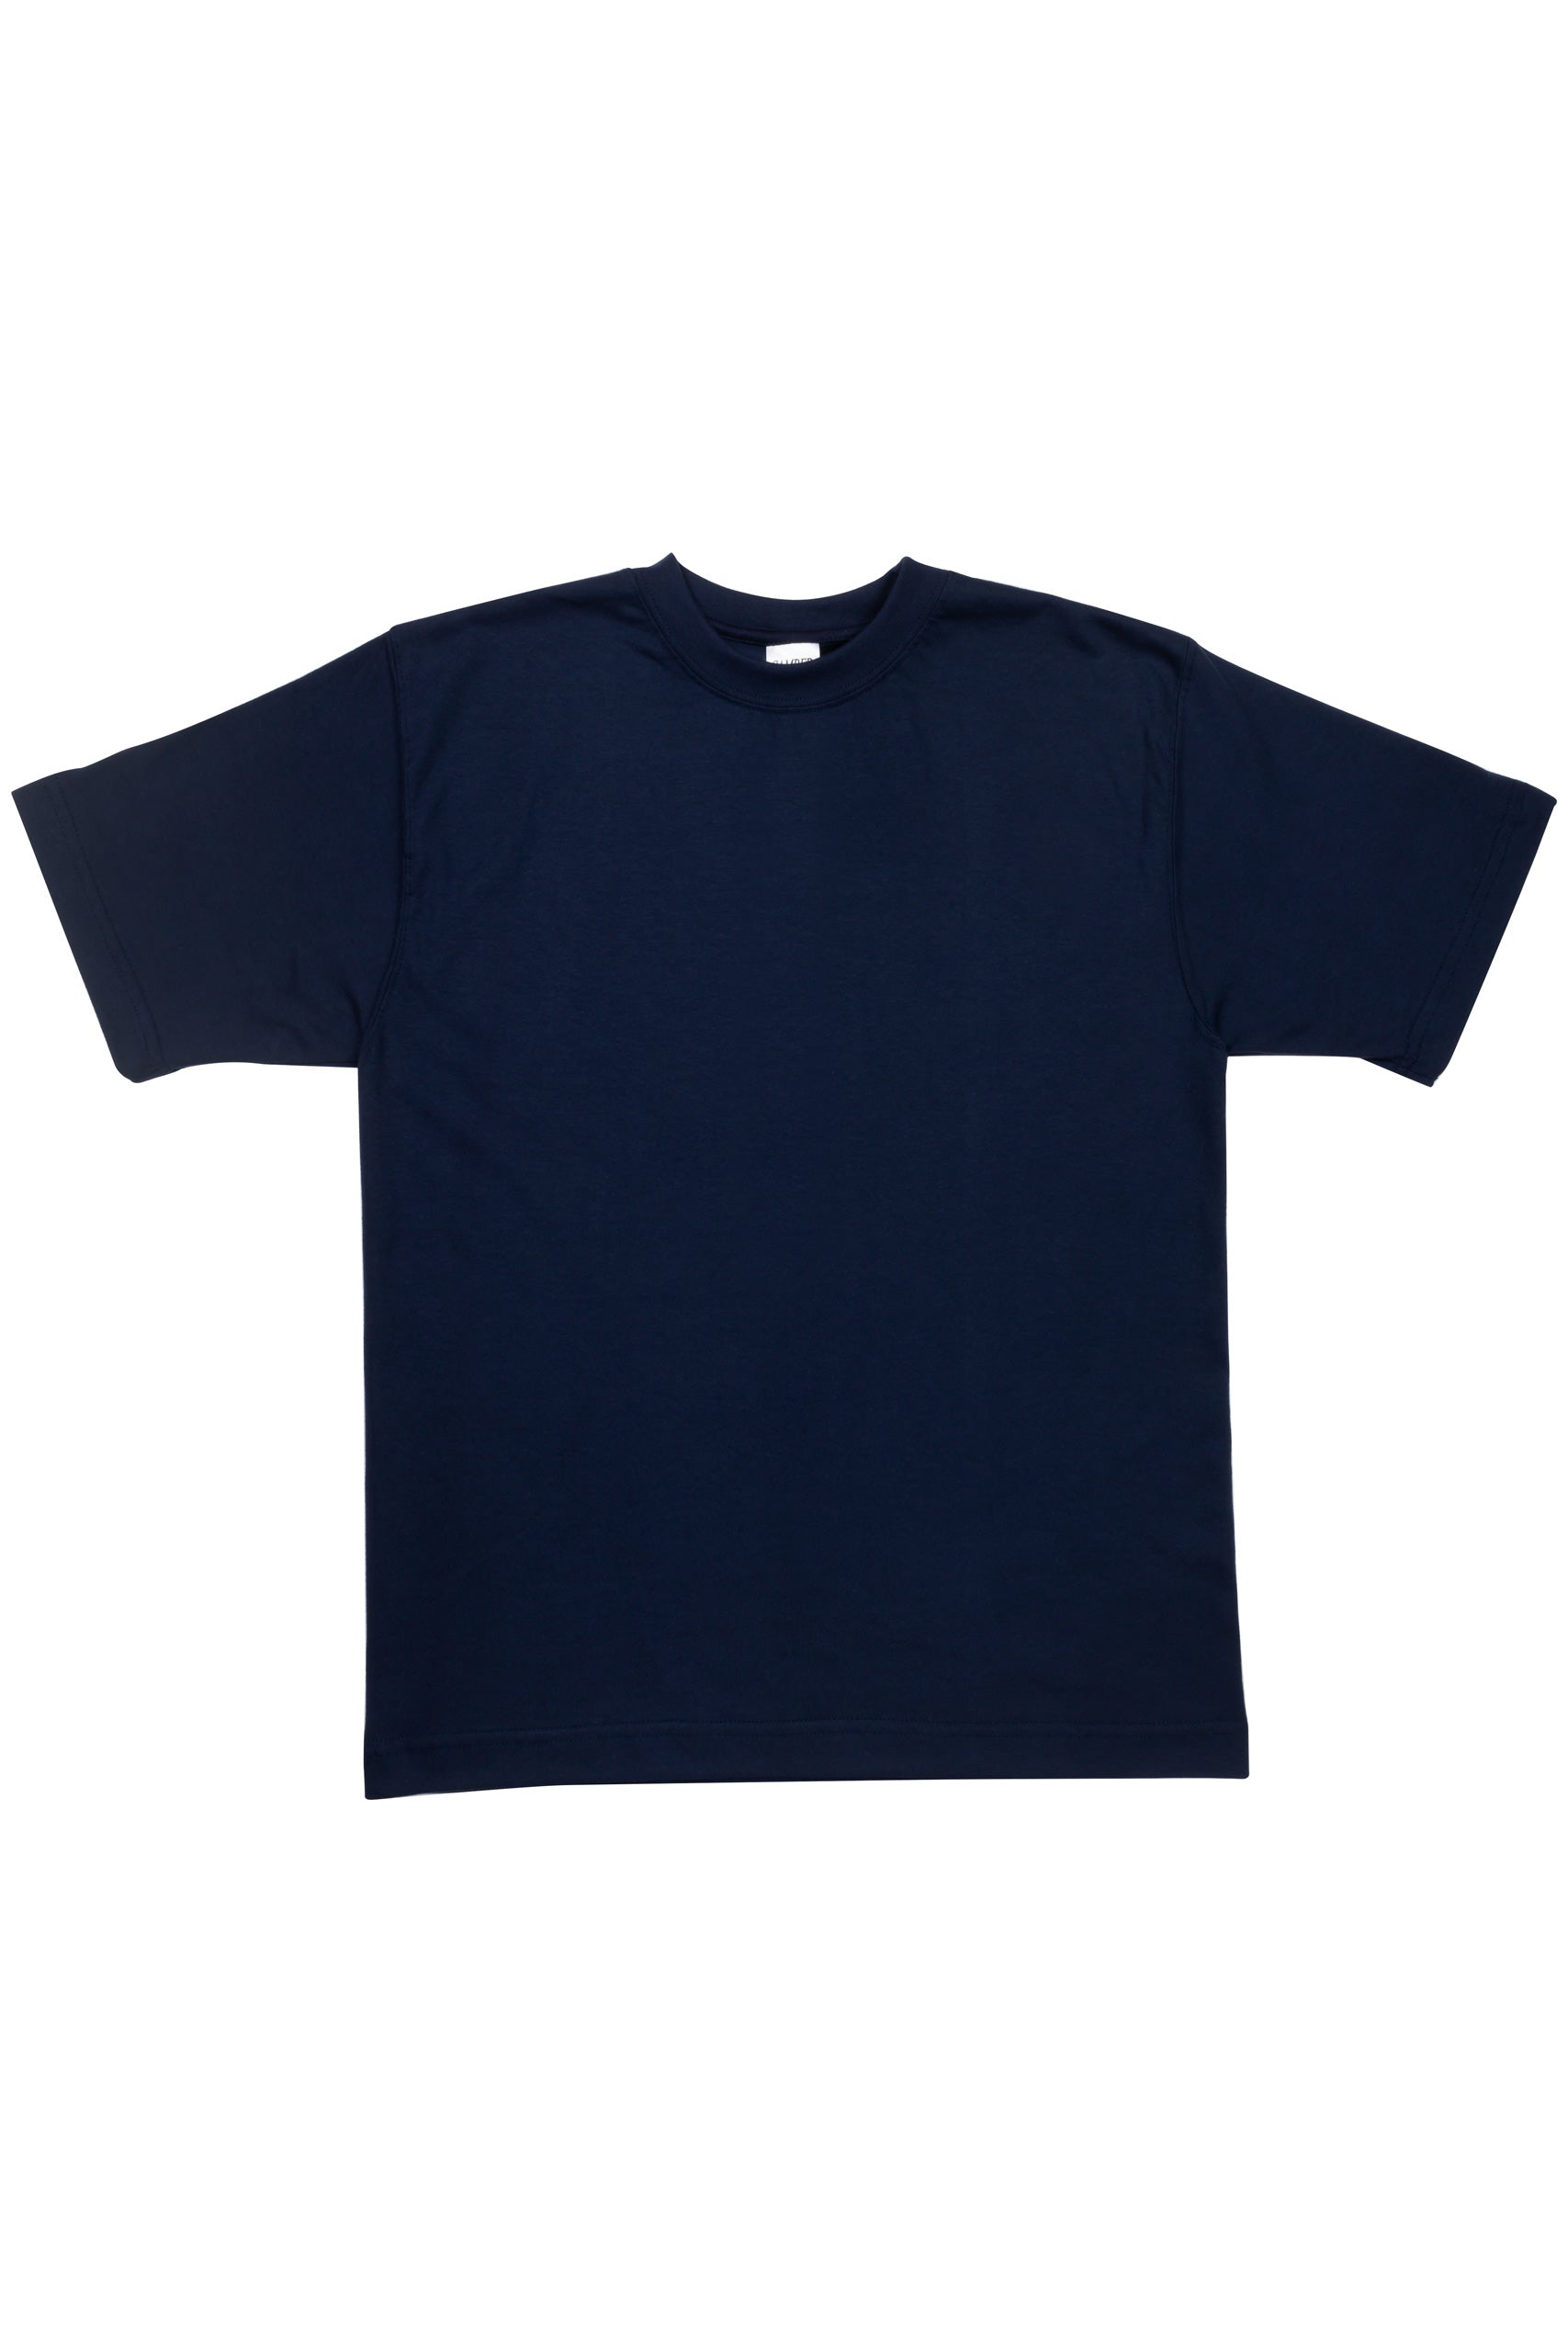 Camber USA Navy Clothiers 6oz T-Shirt 701 – Embark